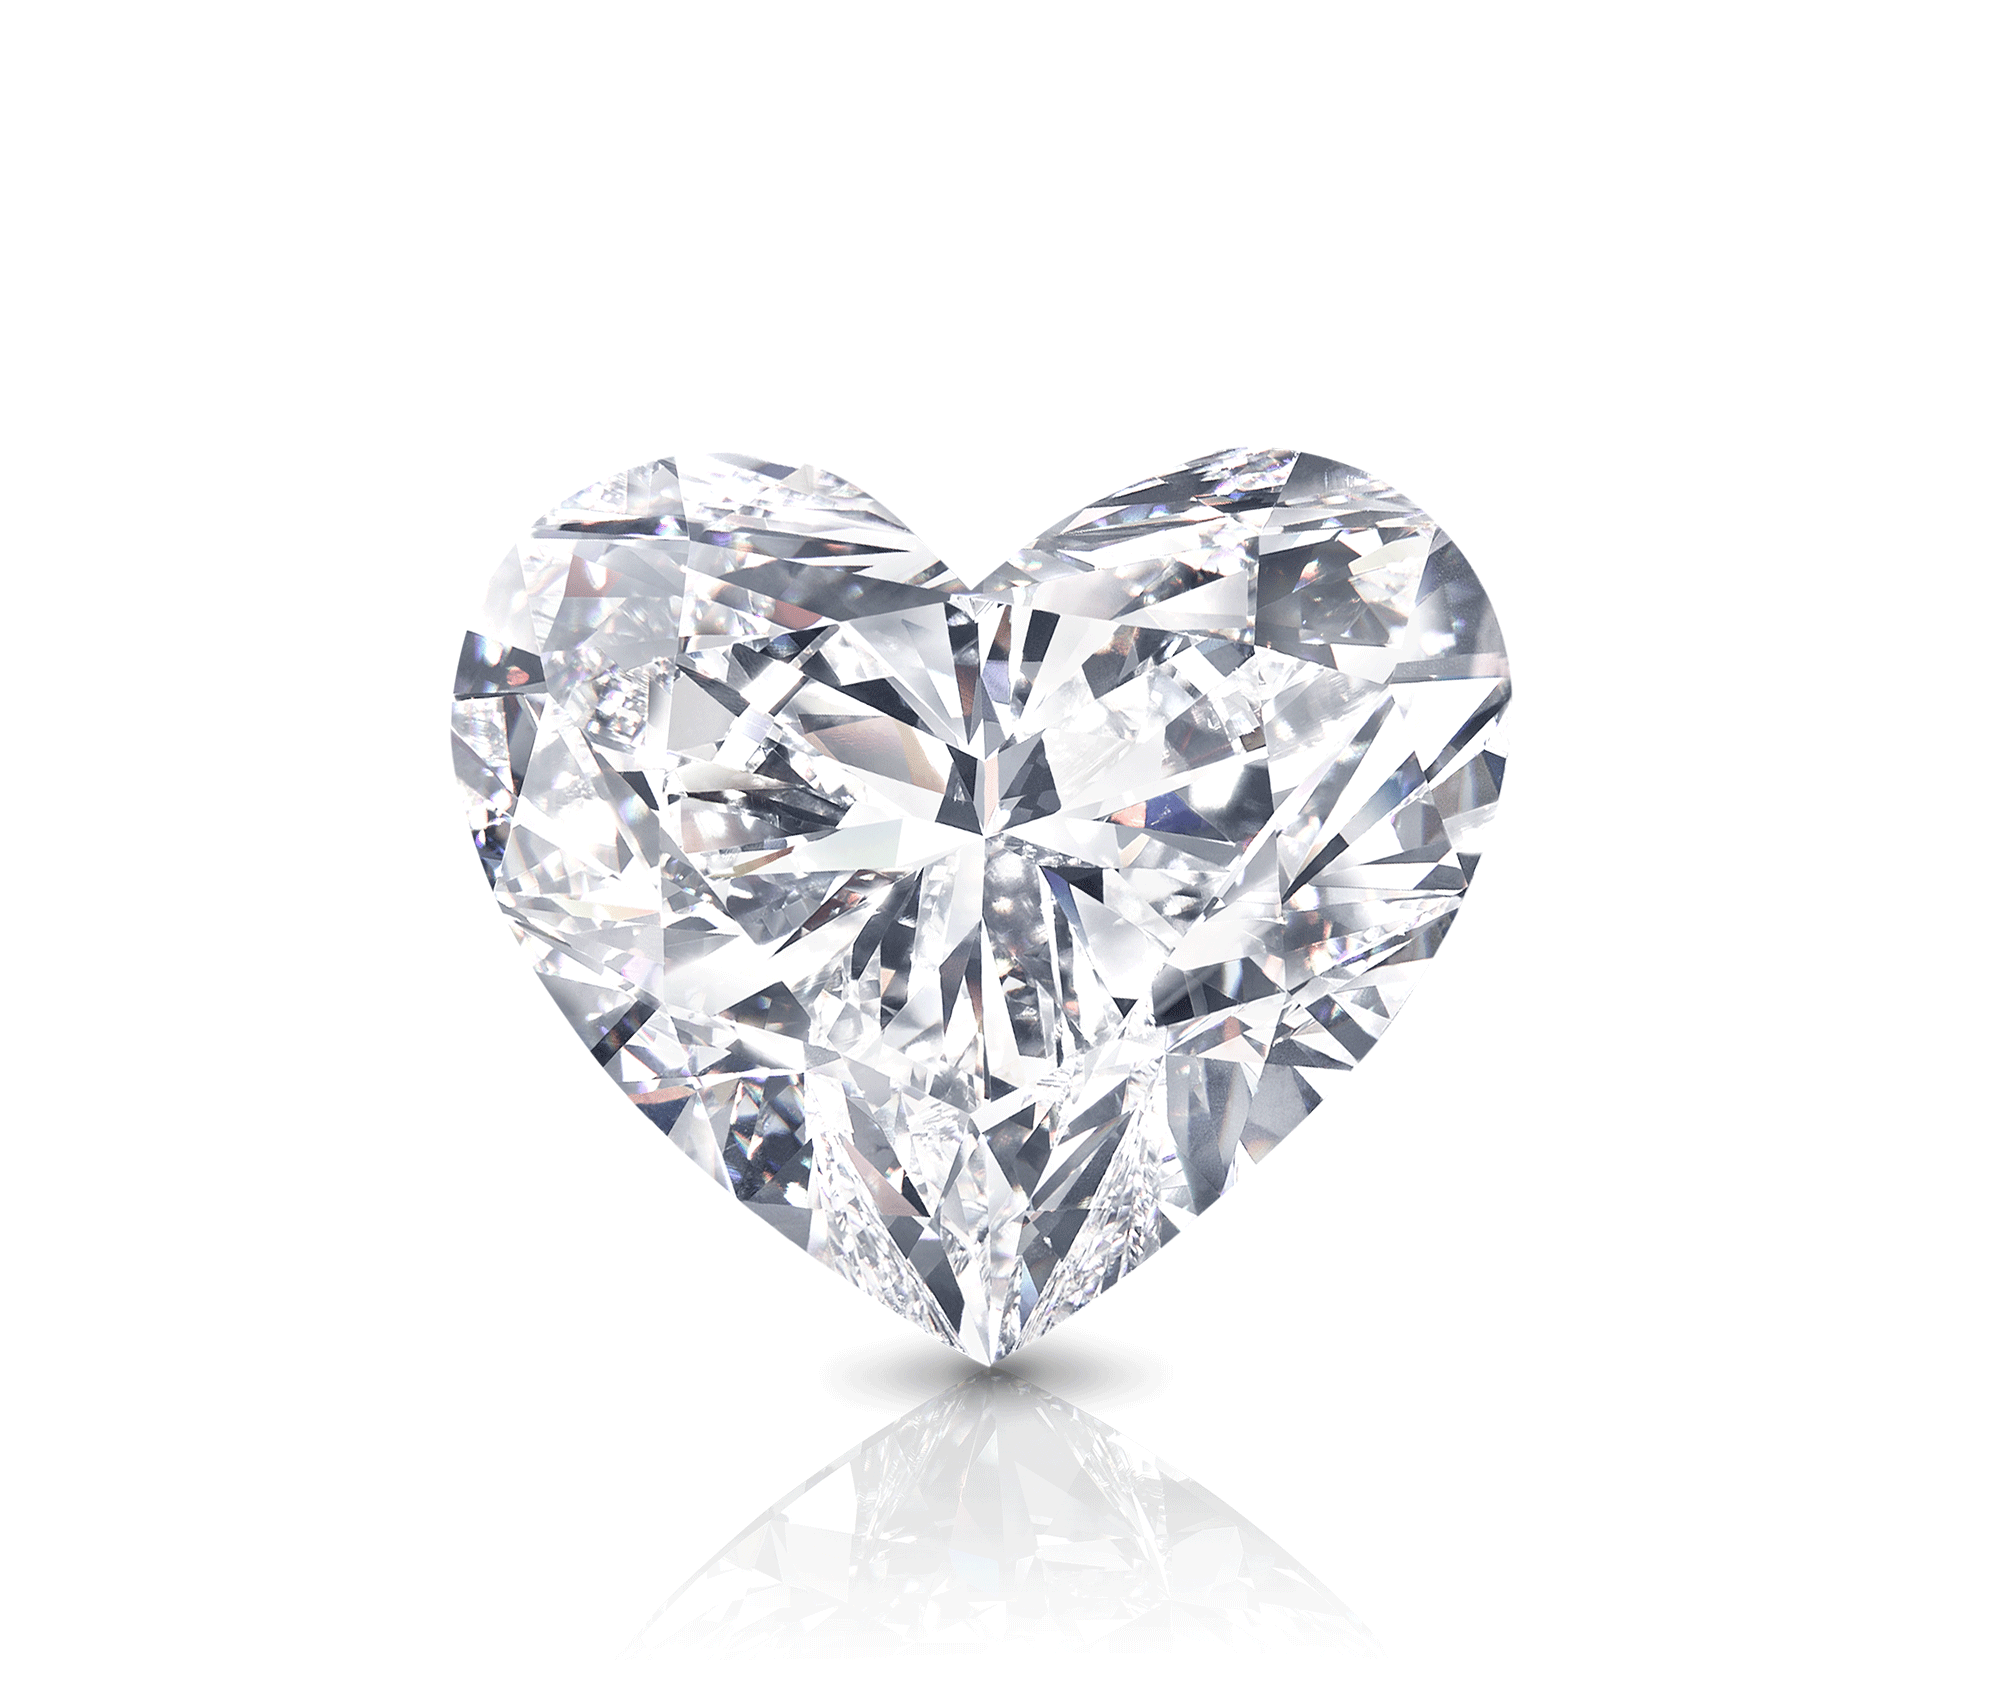 The Graff Venus - a heart shape white diamond